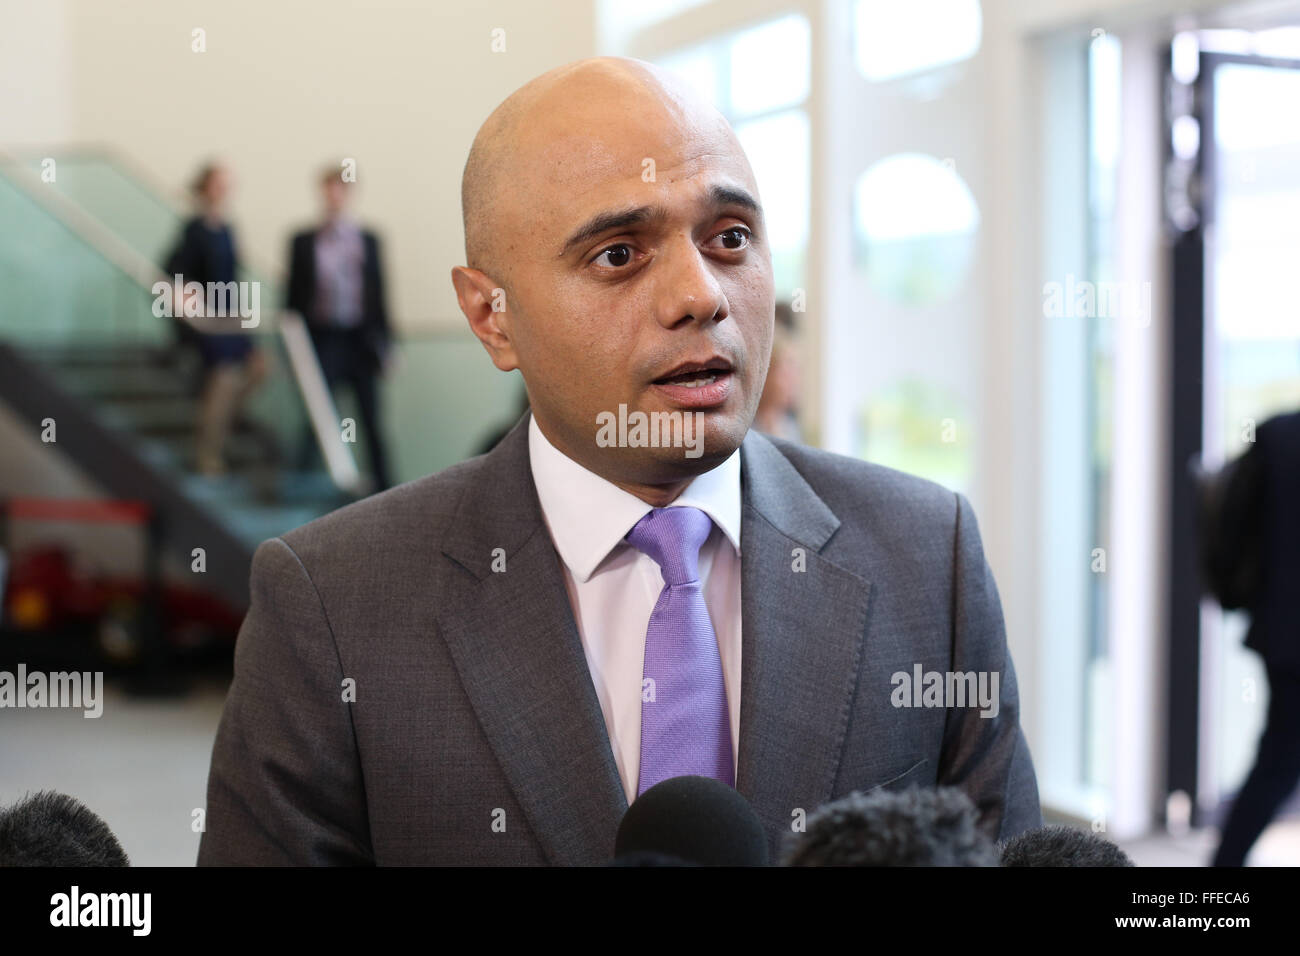 Sajid Javid, British Conservative politician and Member of Parliament for Bromsgrove. Stock Photo